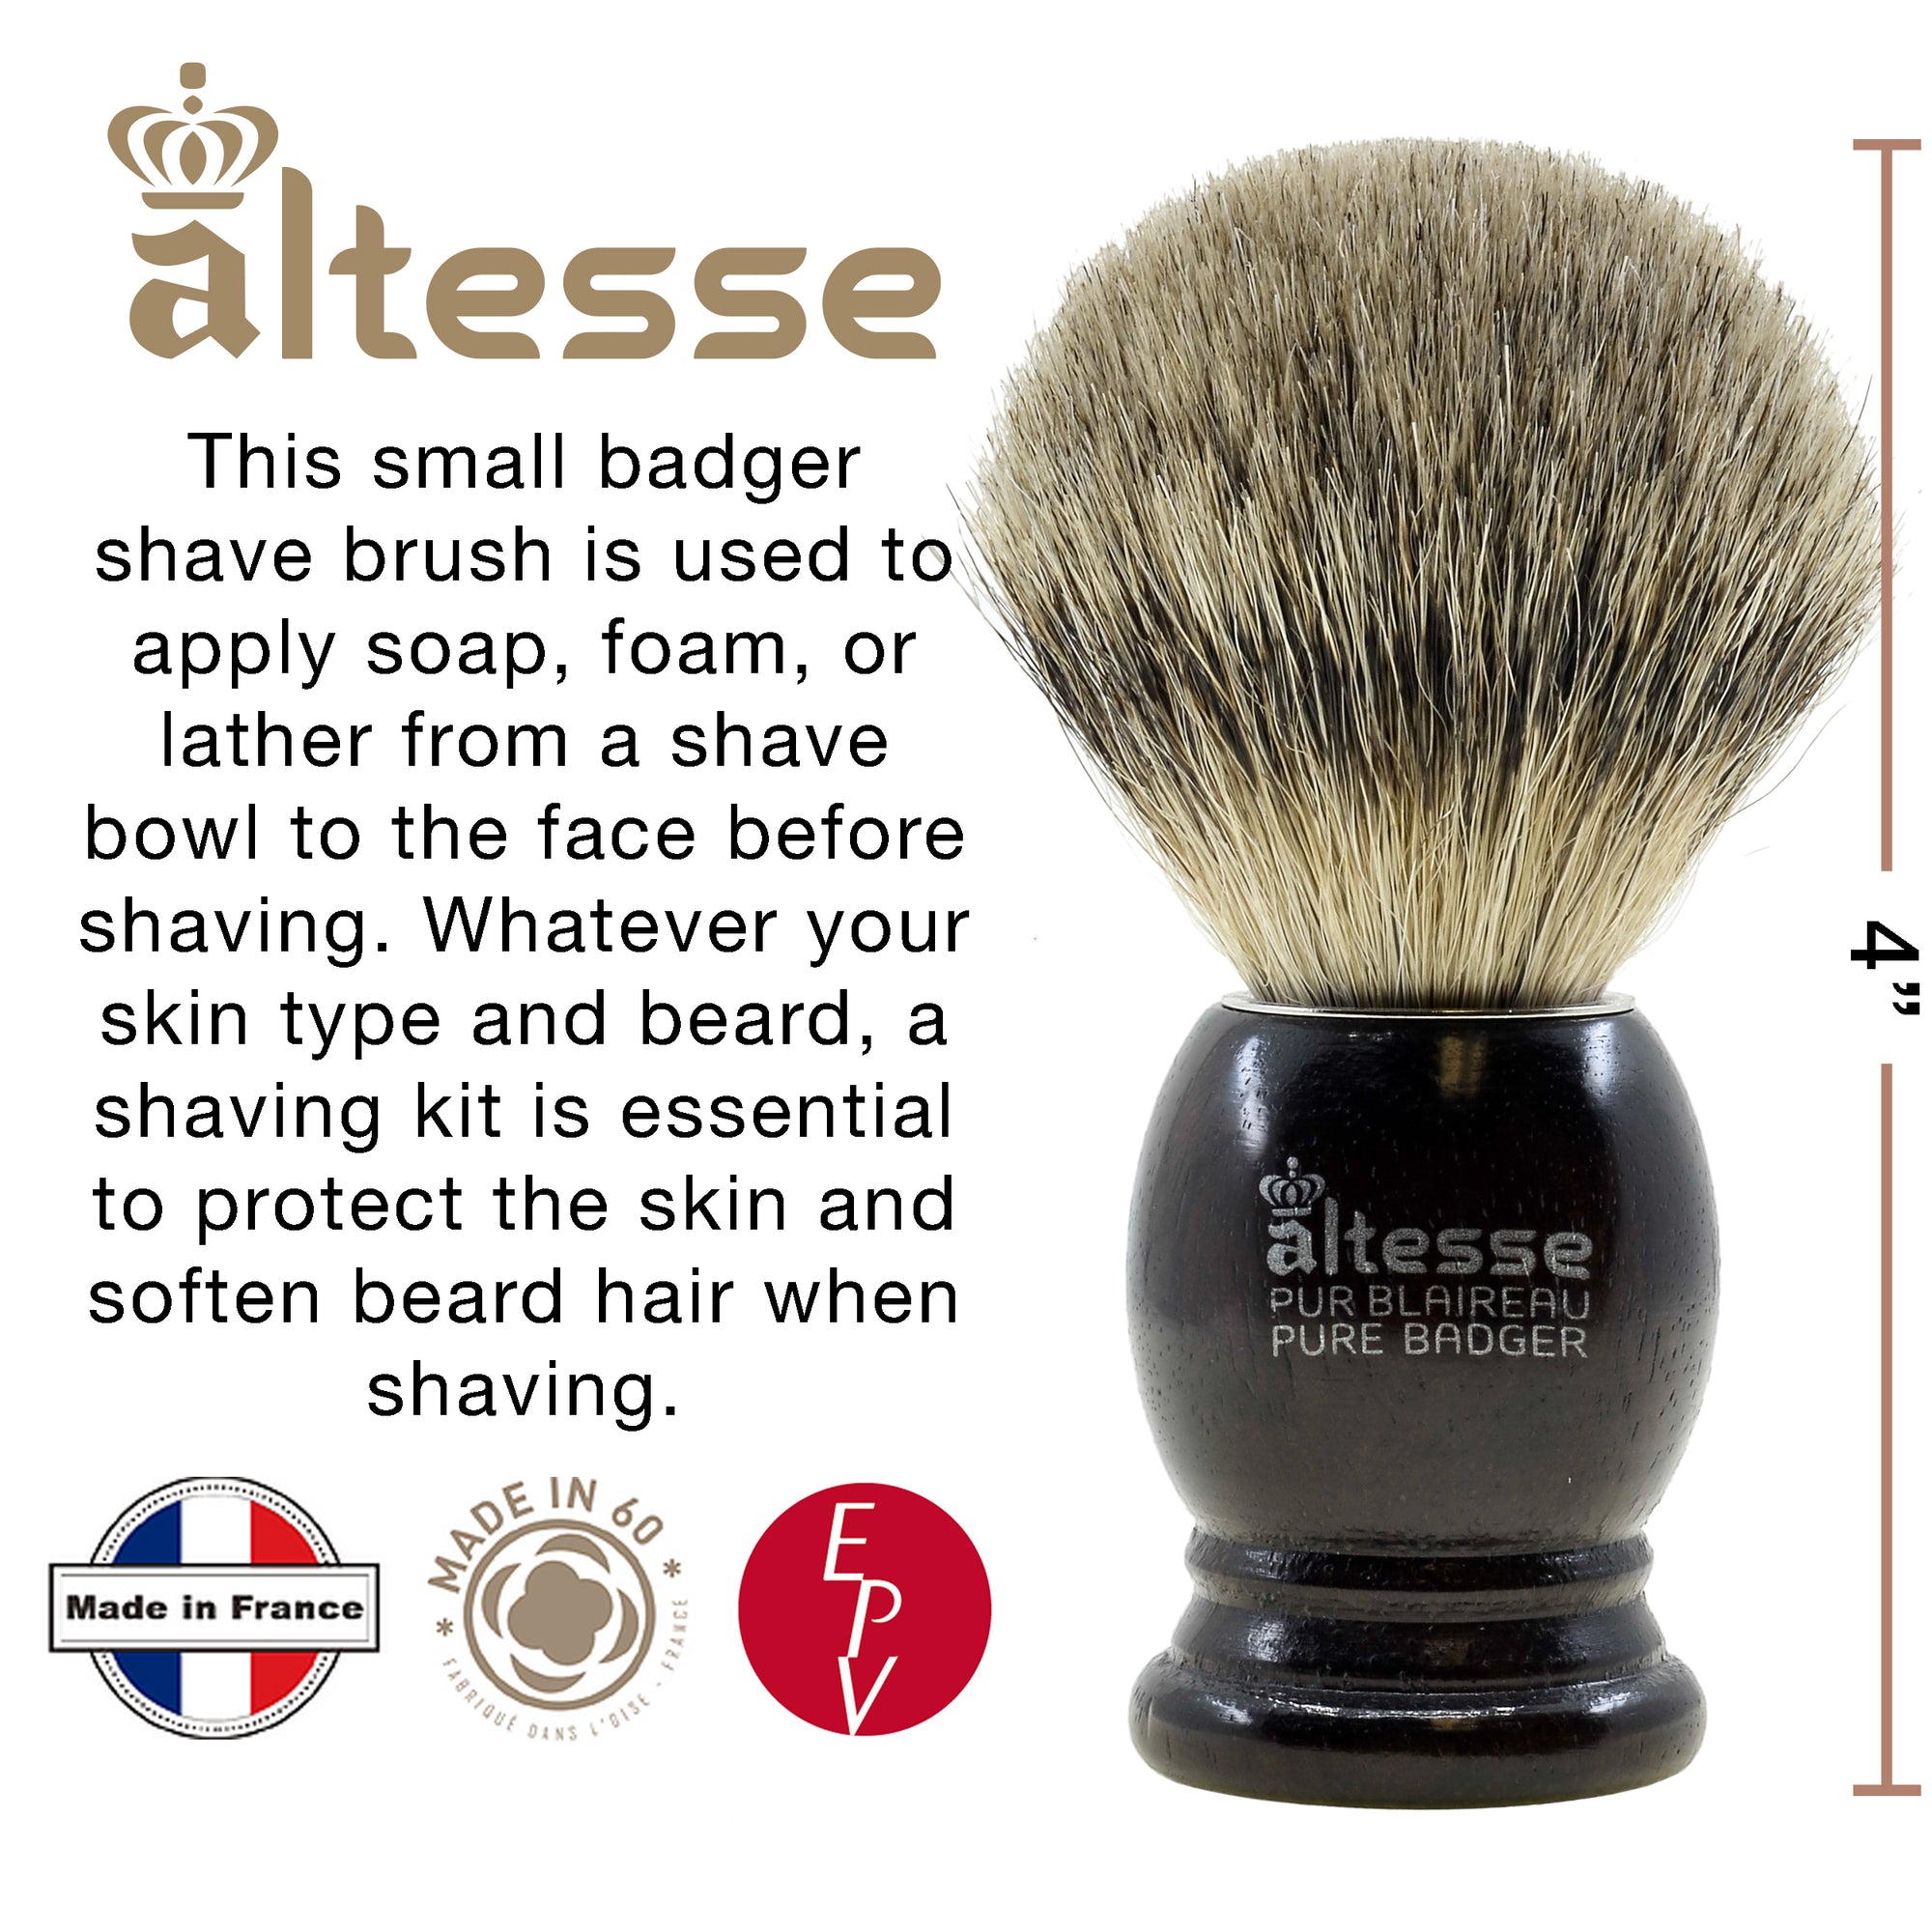 Altesse Natural Bristle French-Made Shaving Brushes